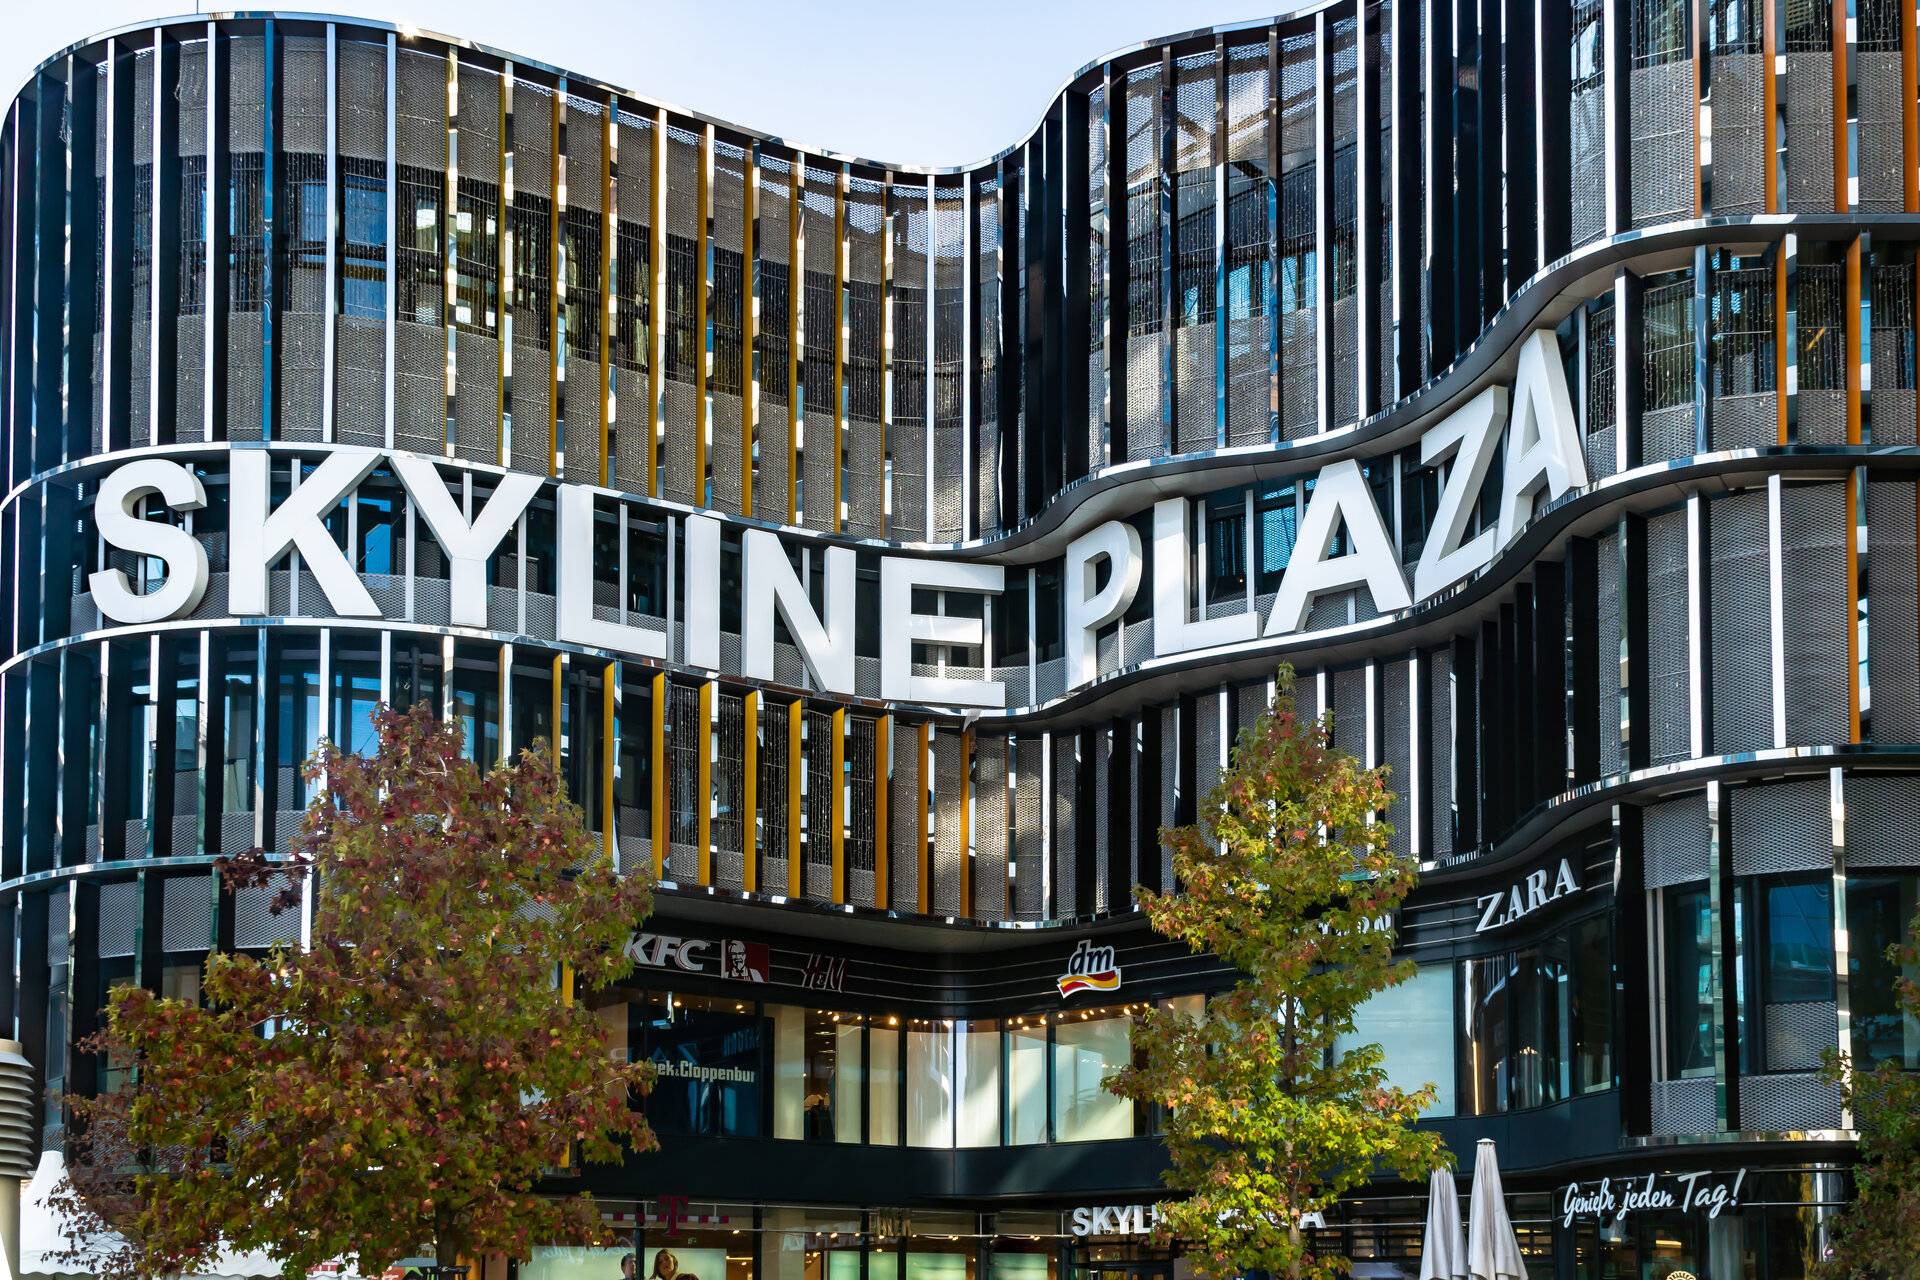 Shopping mall Skyline Plaza in Frankfurt